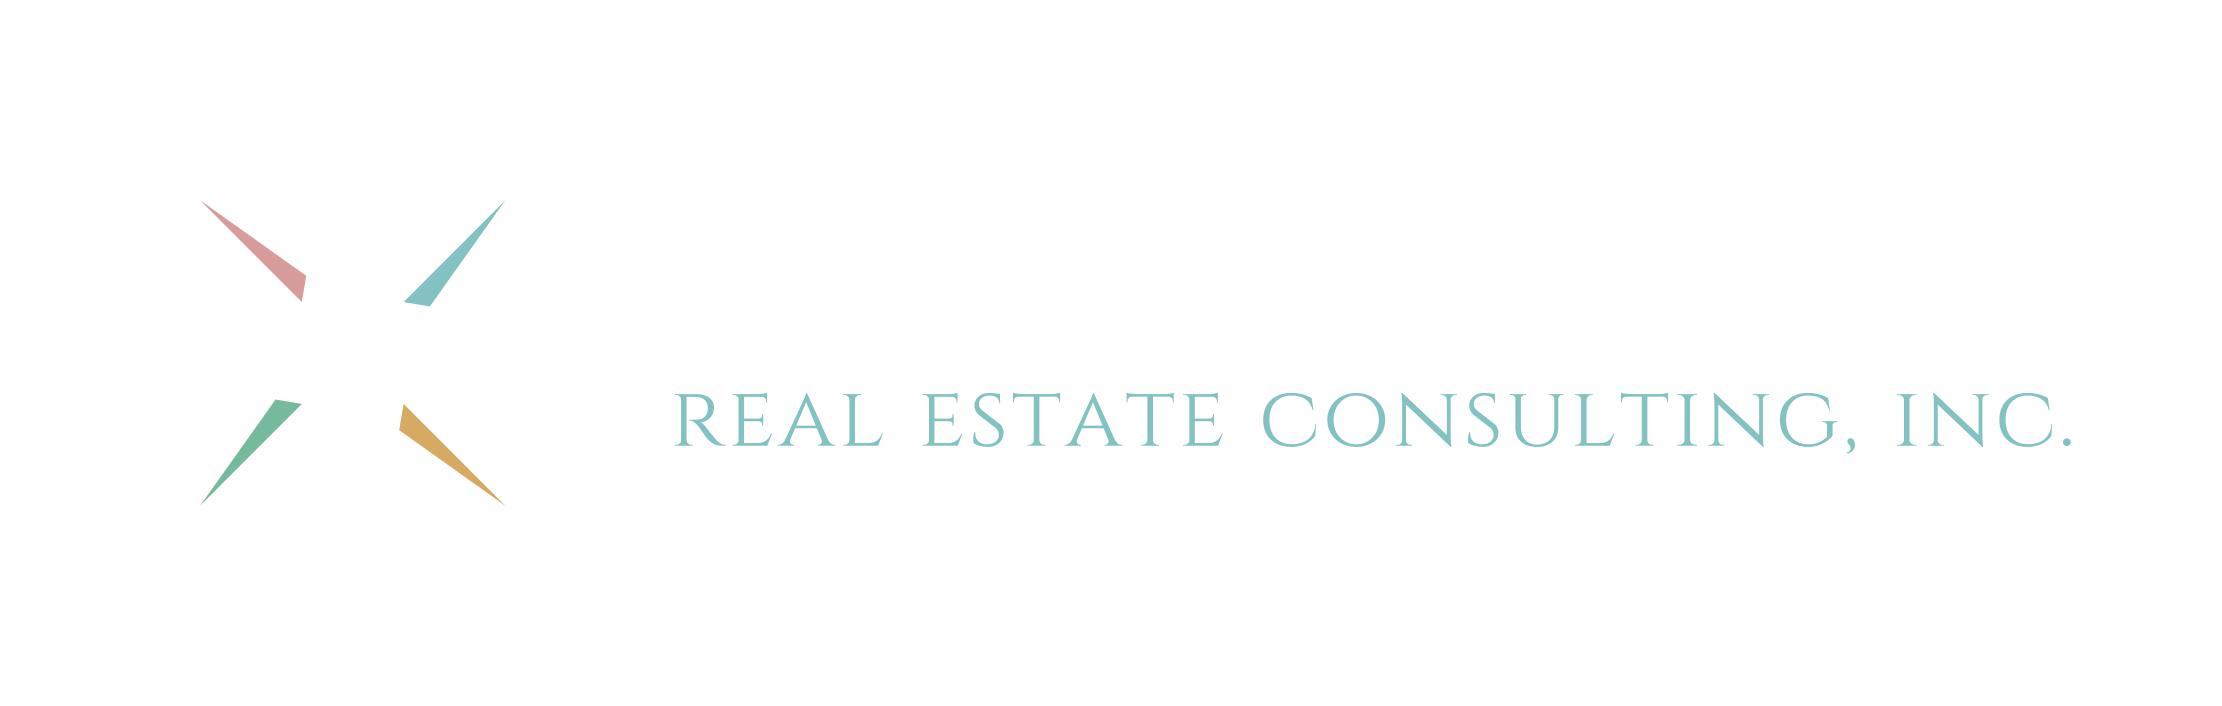 Shawn Wilson, MAI - Compass Real Estate Consulting, Inc. - Lakeland, FL